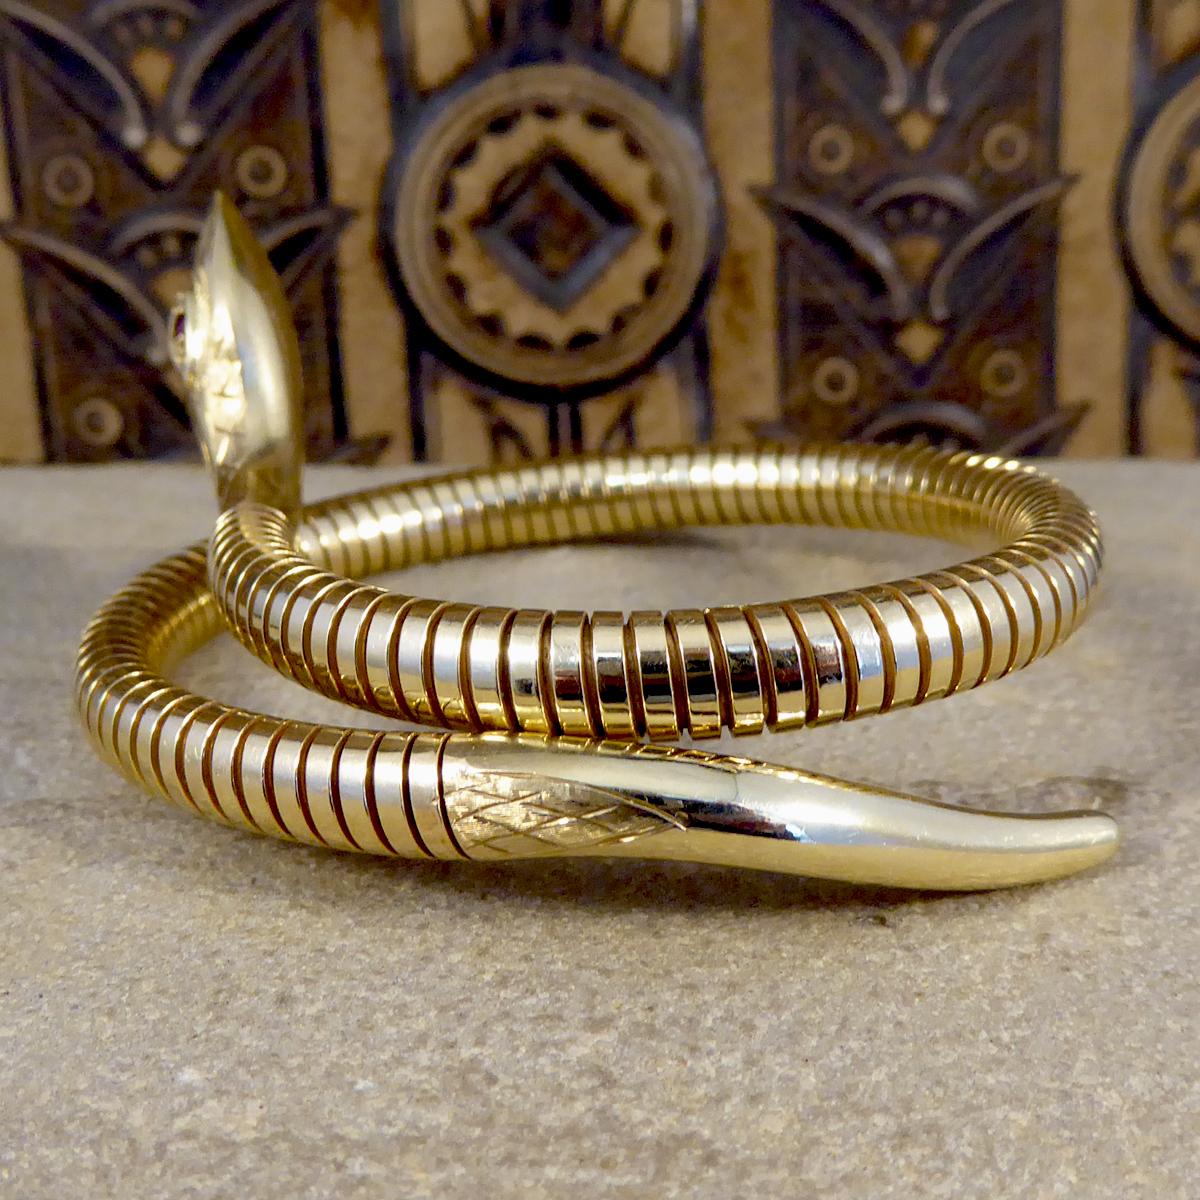 Round Cut Vintage Flexible Snake Bangle Bracelet in 9 Carat Yellow Gold with Ruby Set Eyes